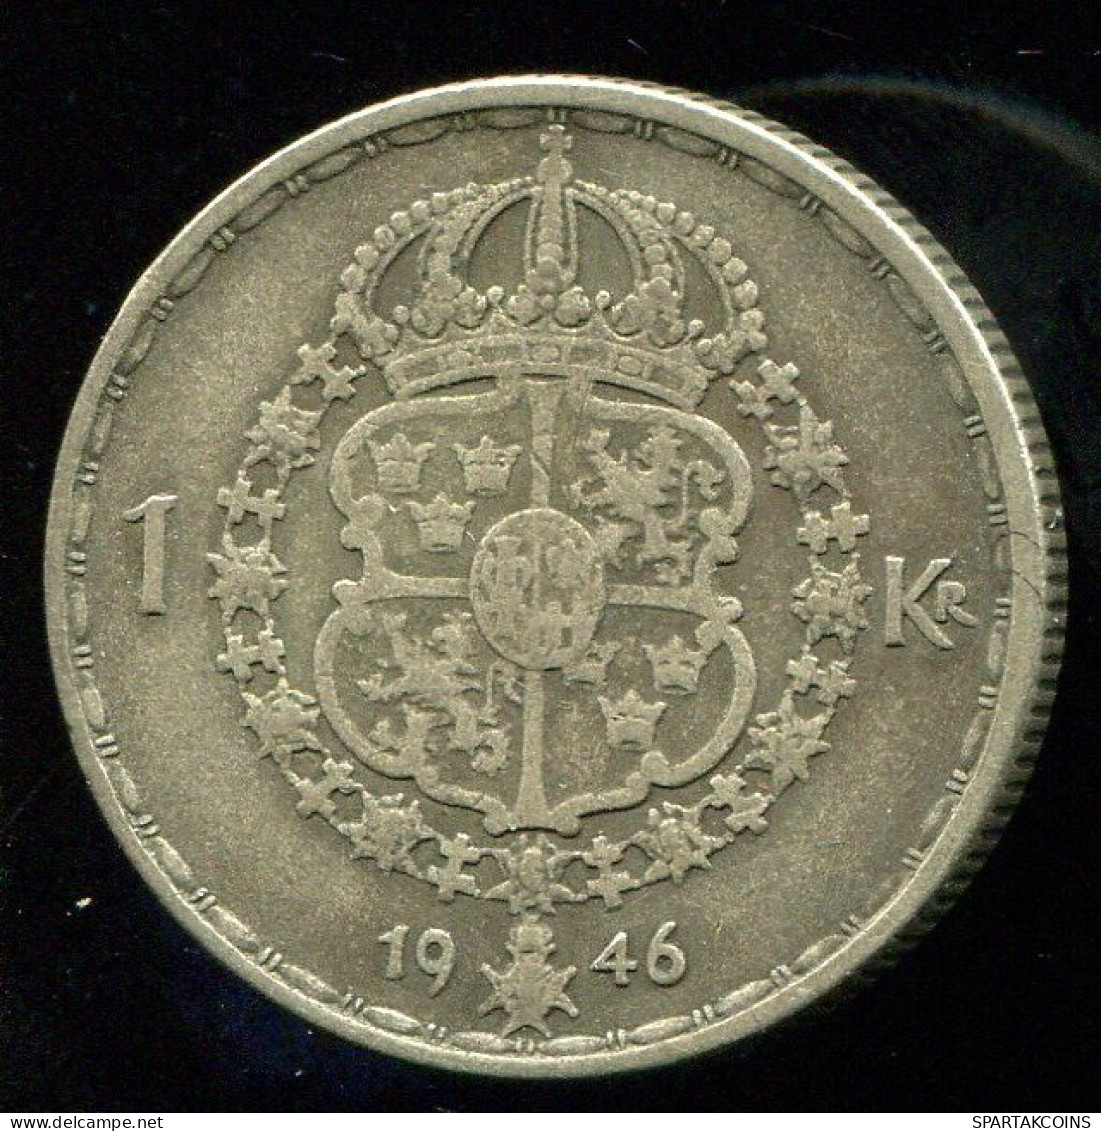 1 KRONA 1946 SWEDEN SILVER Coin #W10422.10.U.A